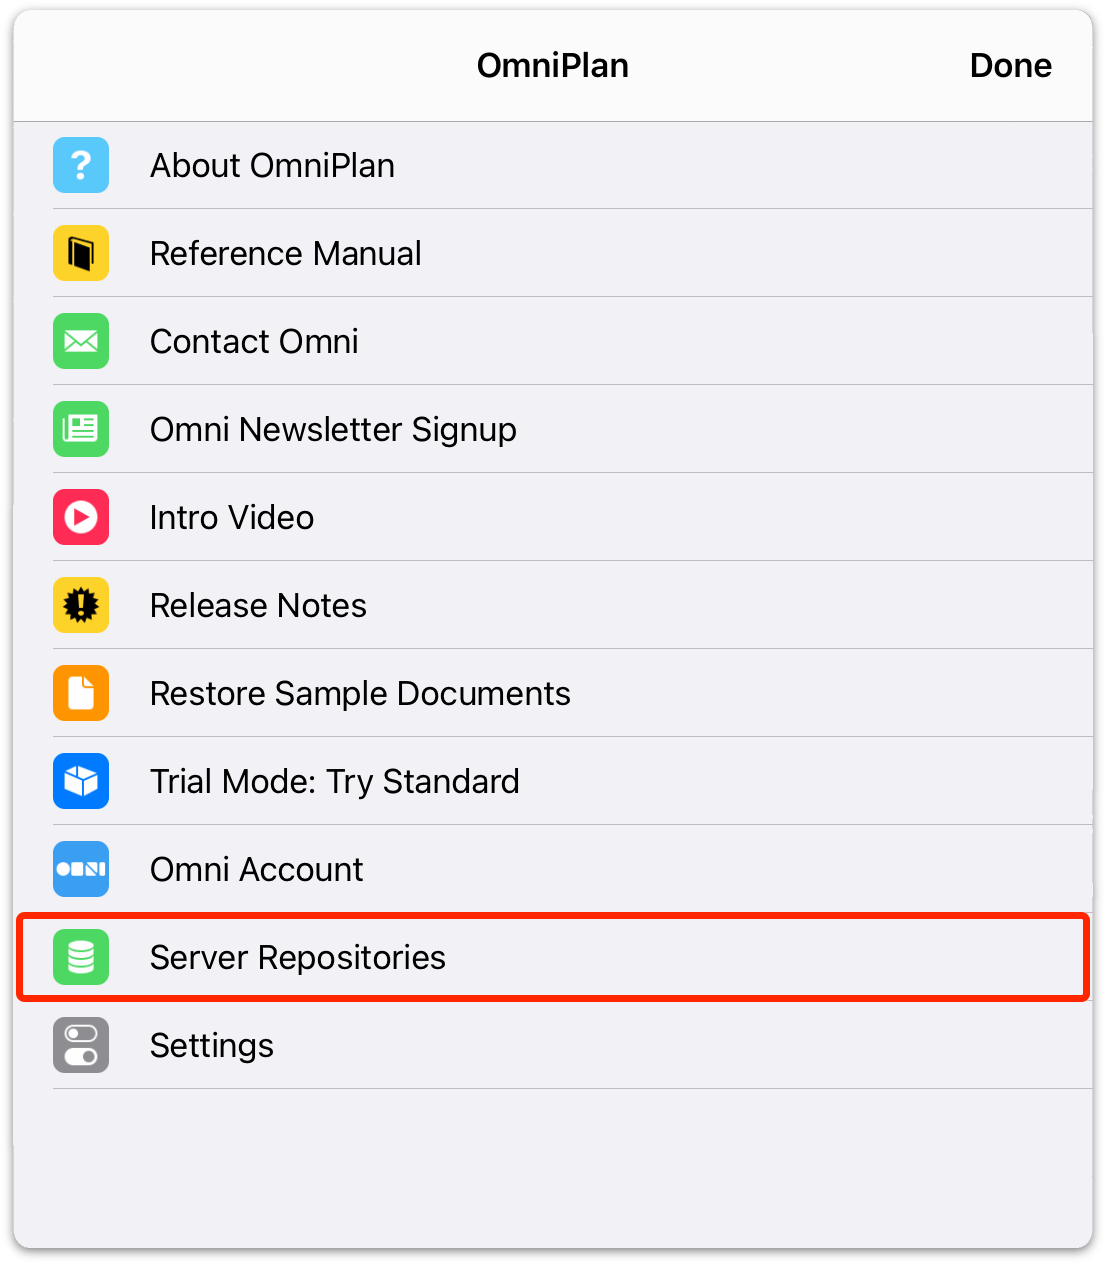 The Server Repositories item in the App Menu